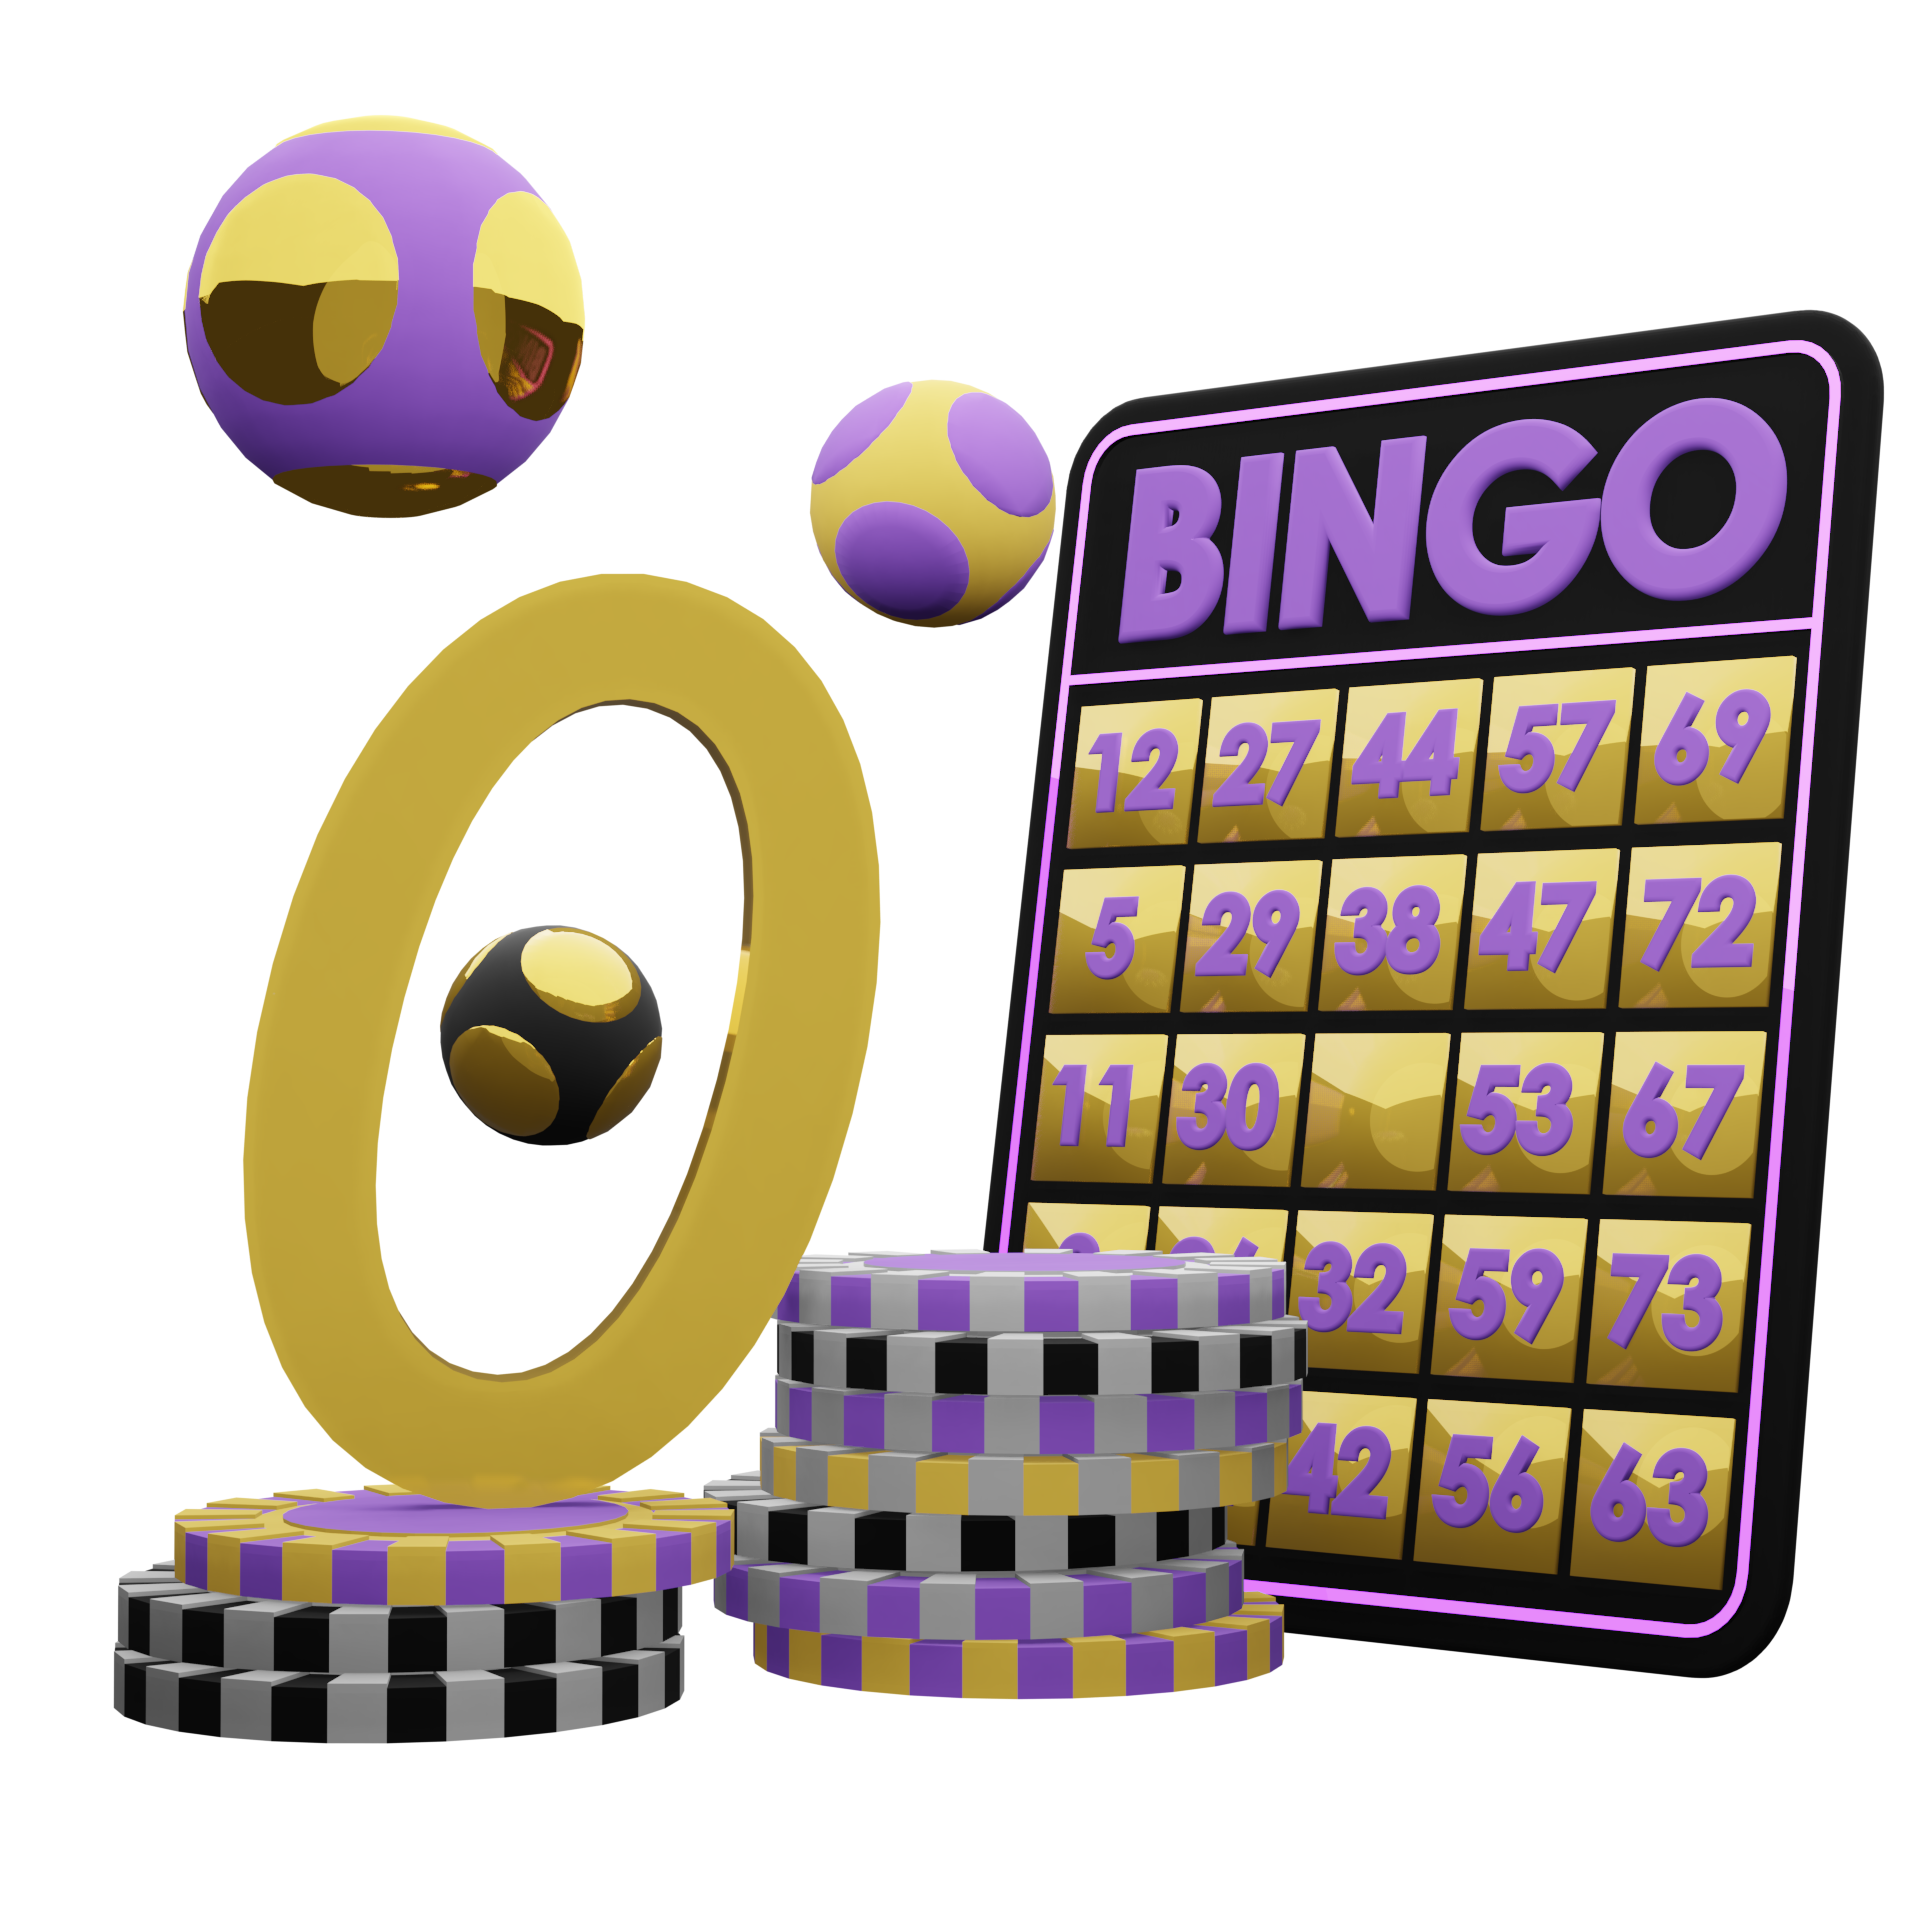 bingo sites no wagering